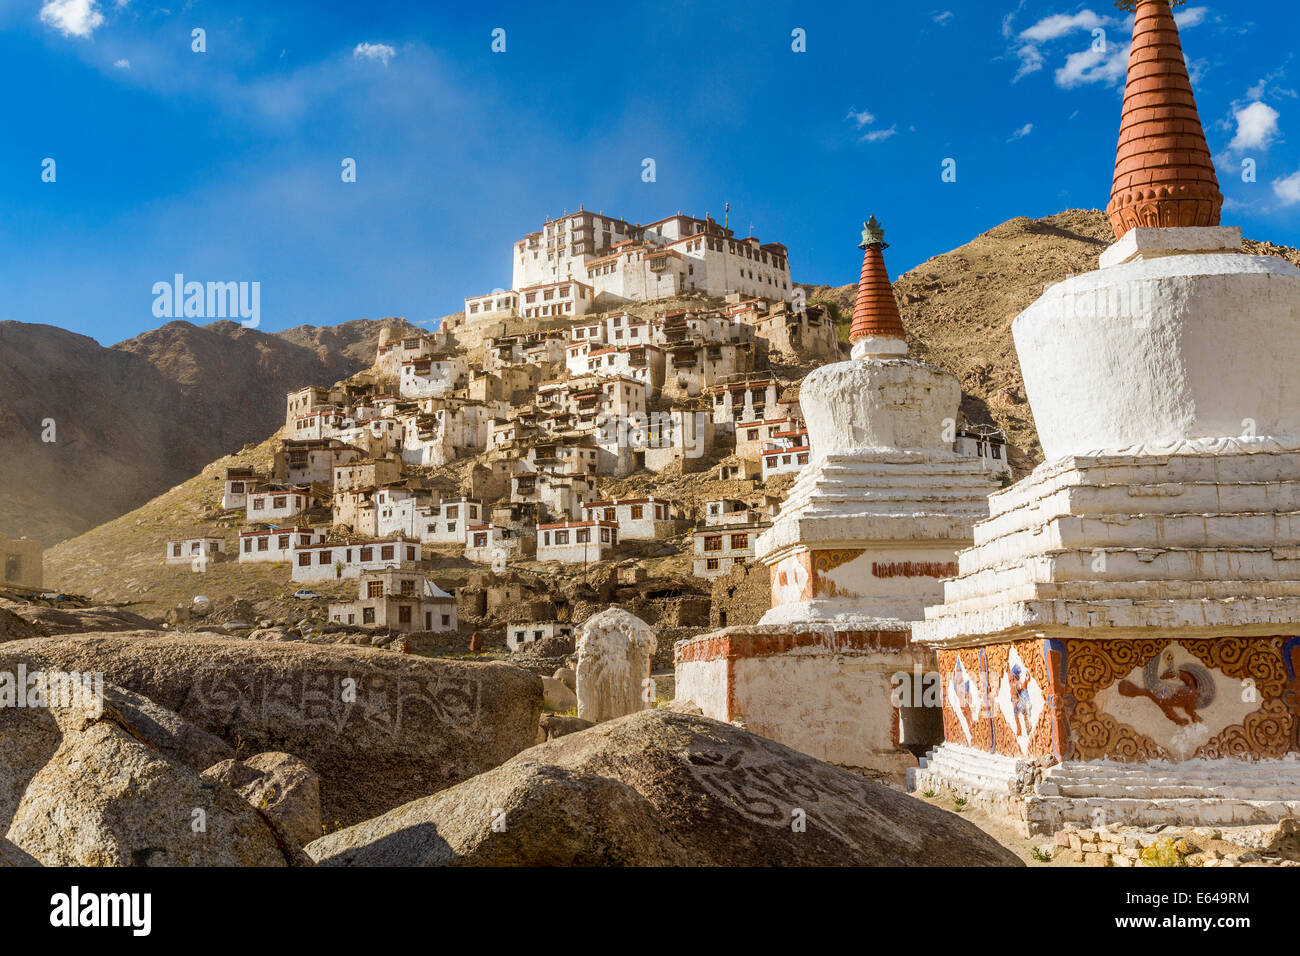 Chemre oder Chemrey Dorf & Kloster, nr Leh, Ladakh, Indien Stockfoto